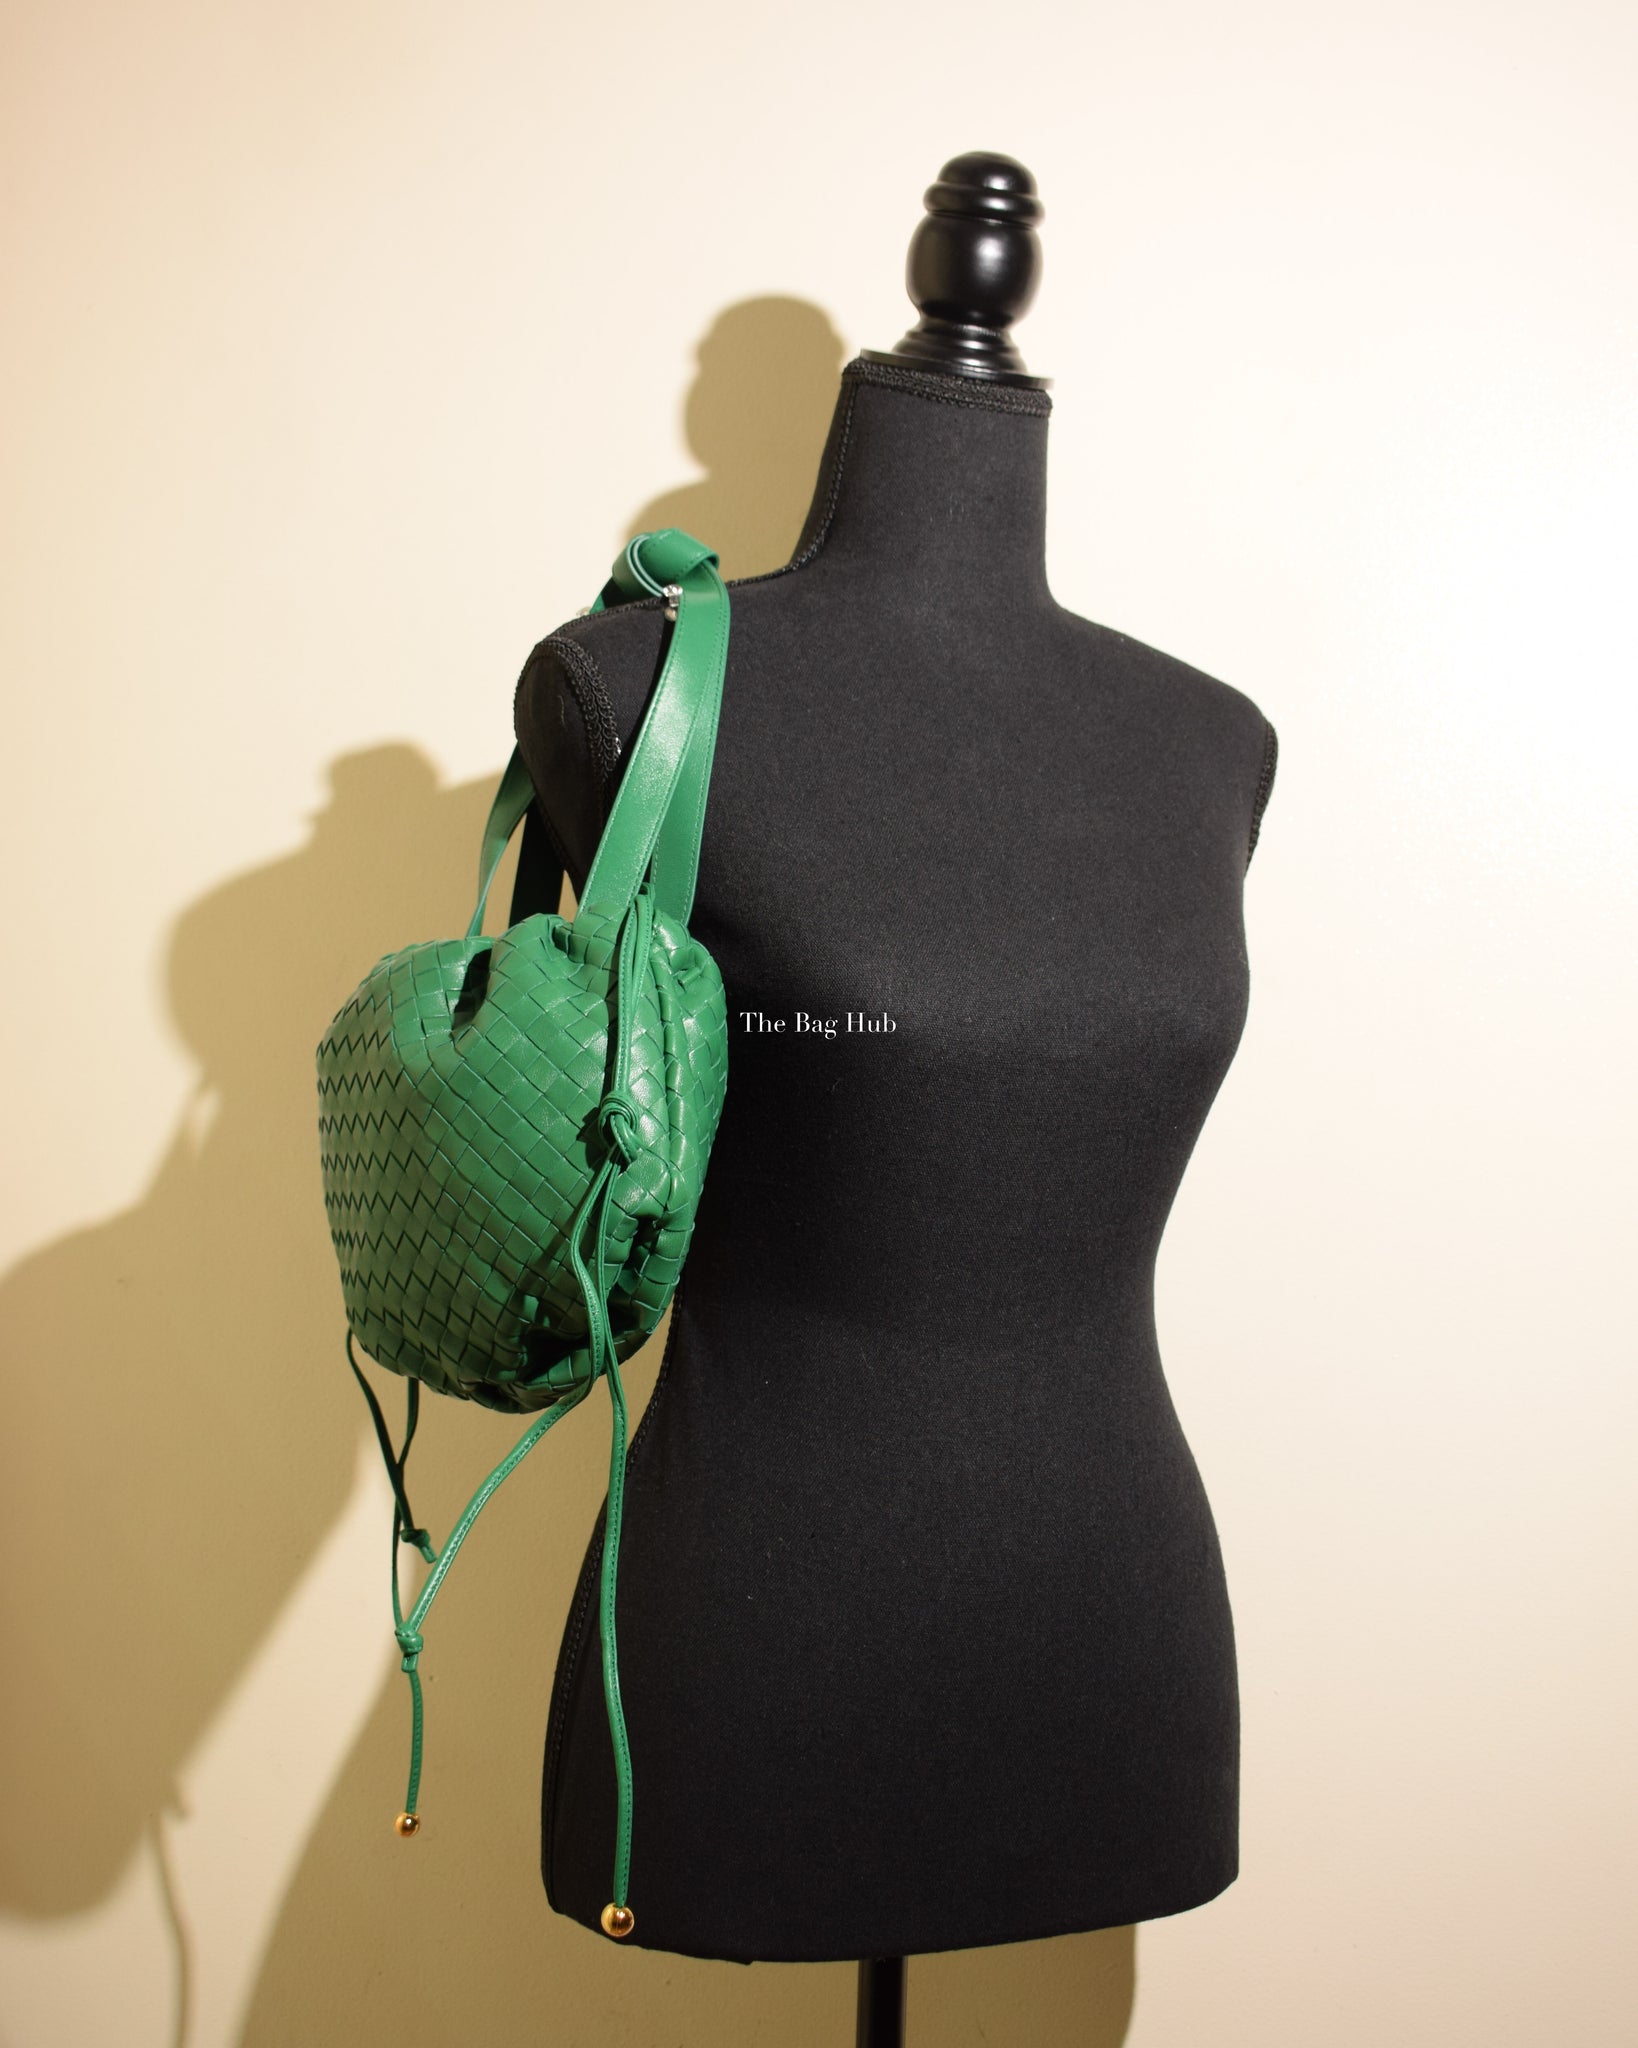 Bottega Veneta Green Intrecciato Small Bulb Bag